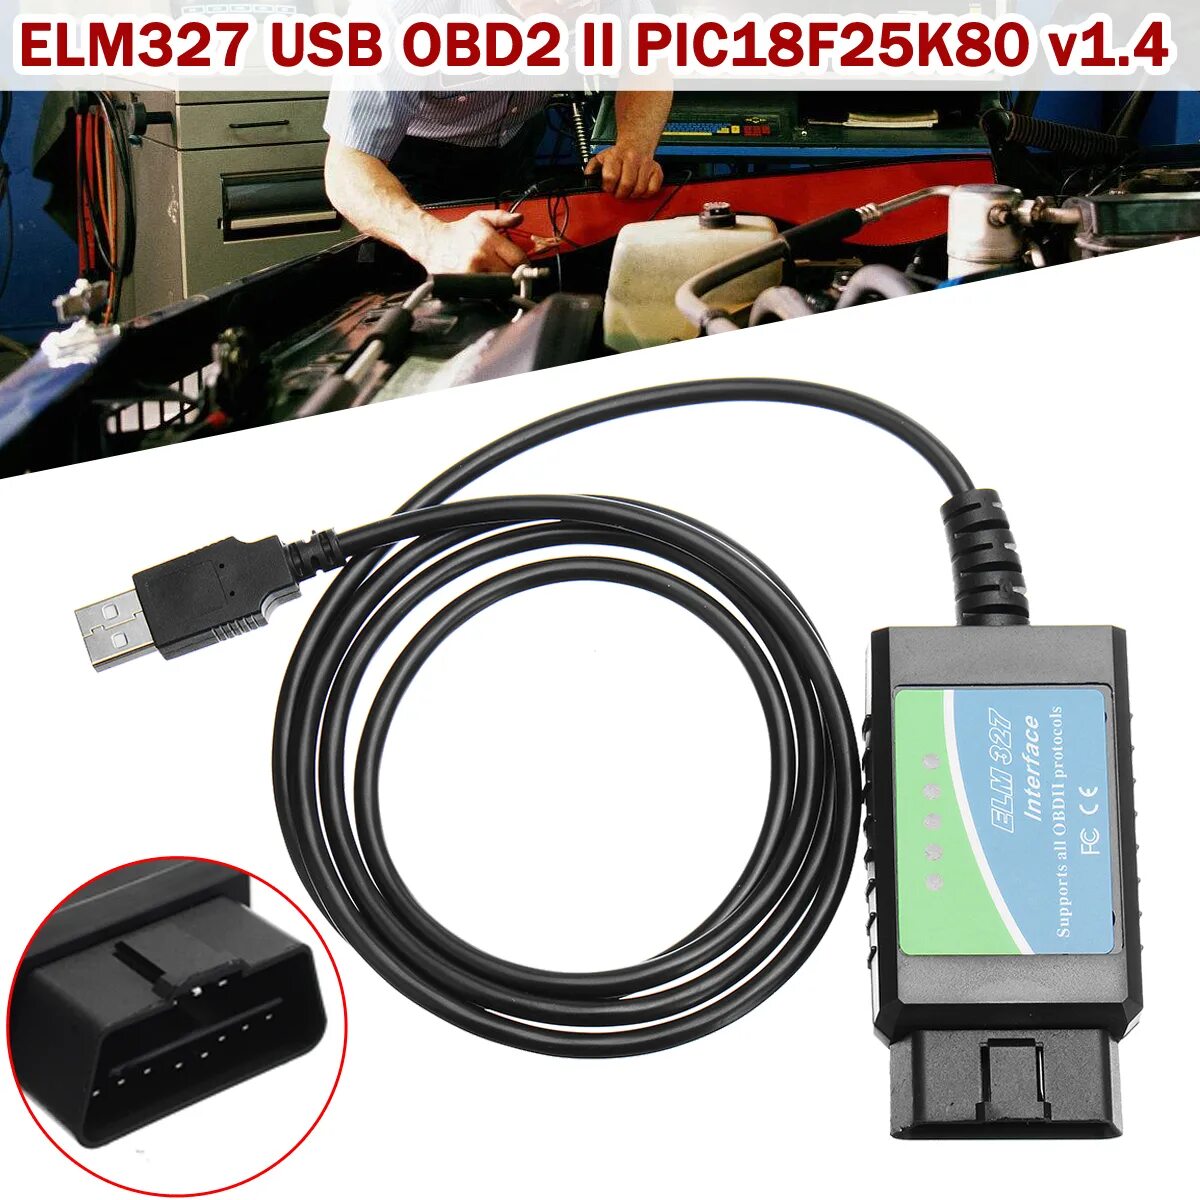 Elm327 USB + кабель для w124. Obd2 elm327 USB. Elm327 USB OBD-11 9600. Elm327 USB Renault. Obd volkswagen